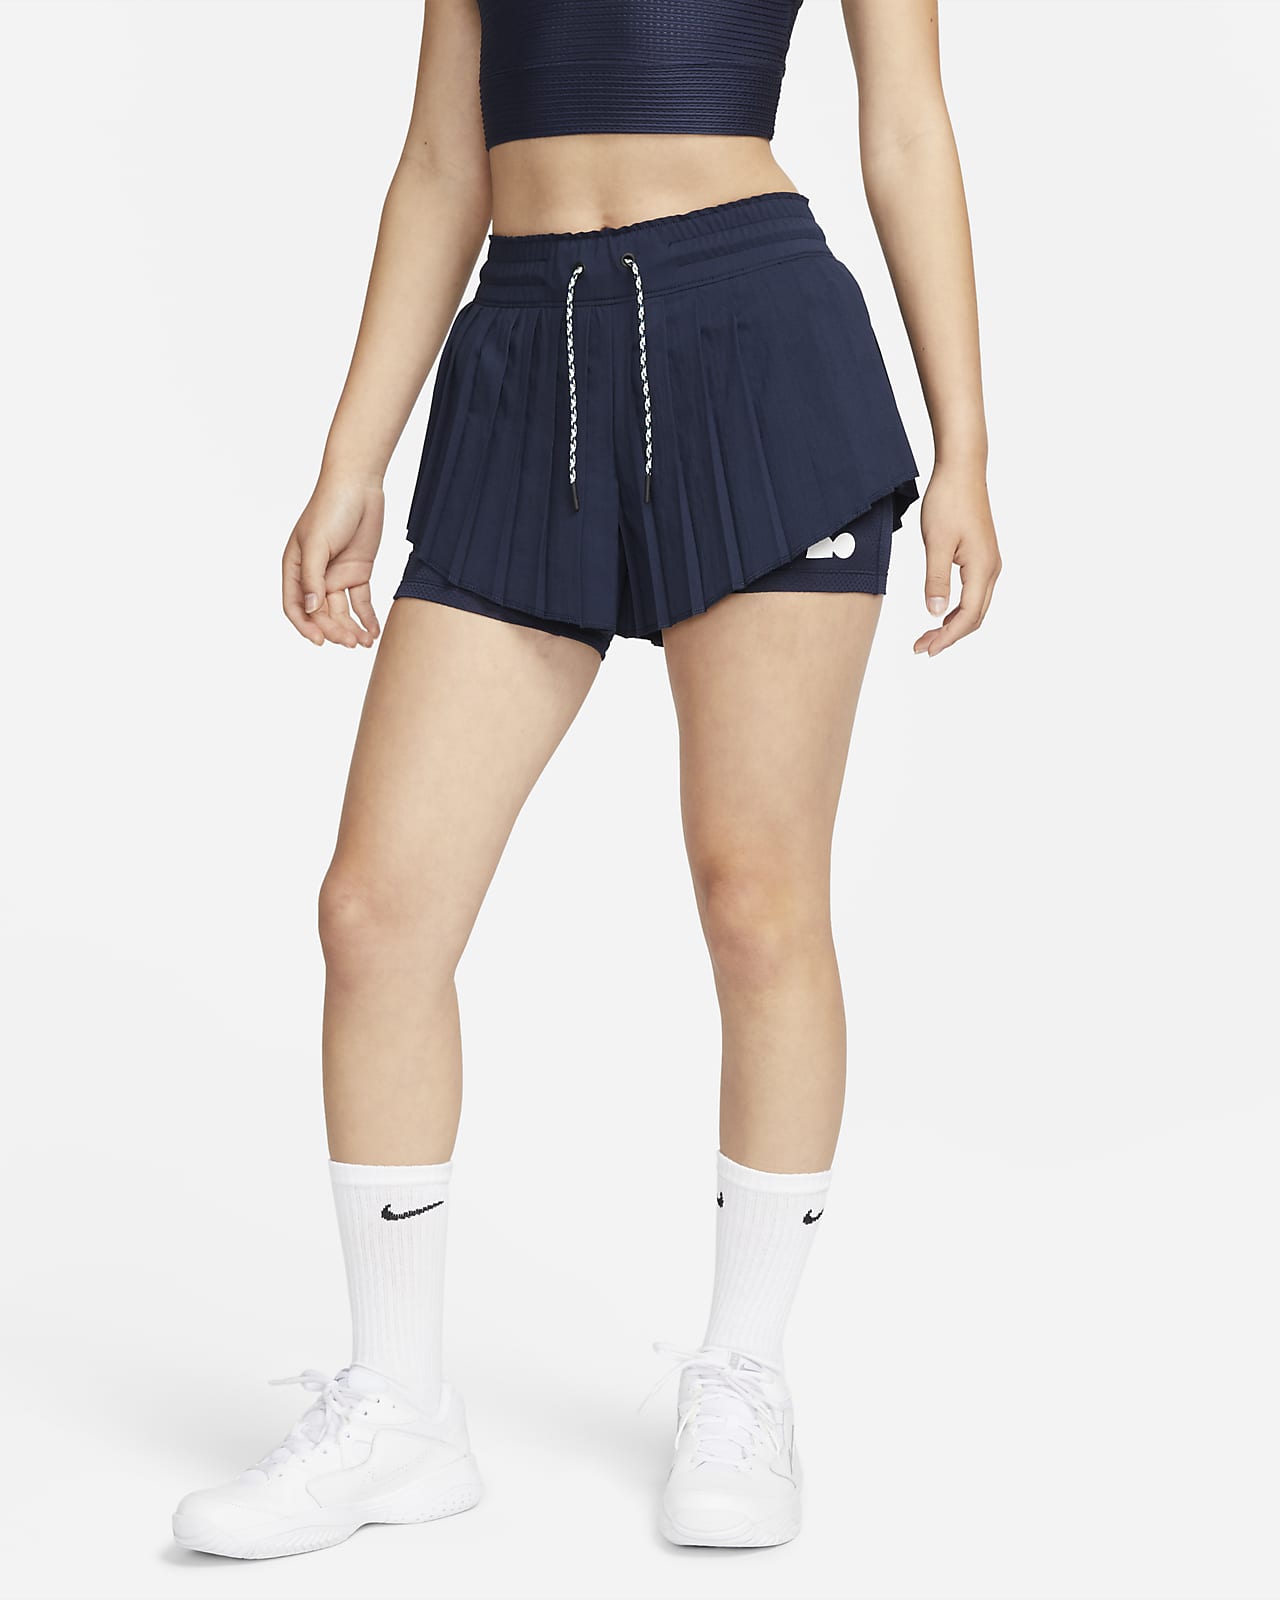 Naomi Osaka Women's Tennis Shorts